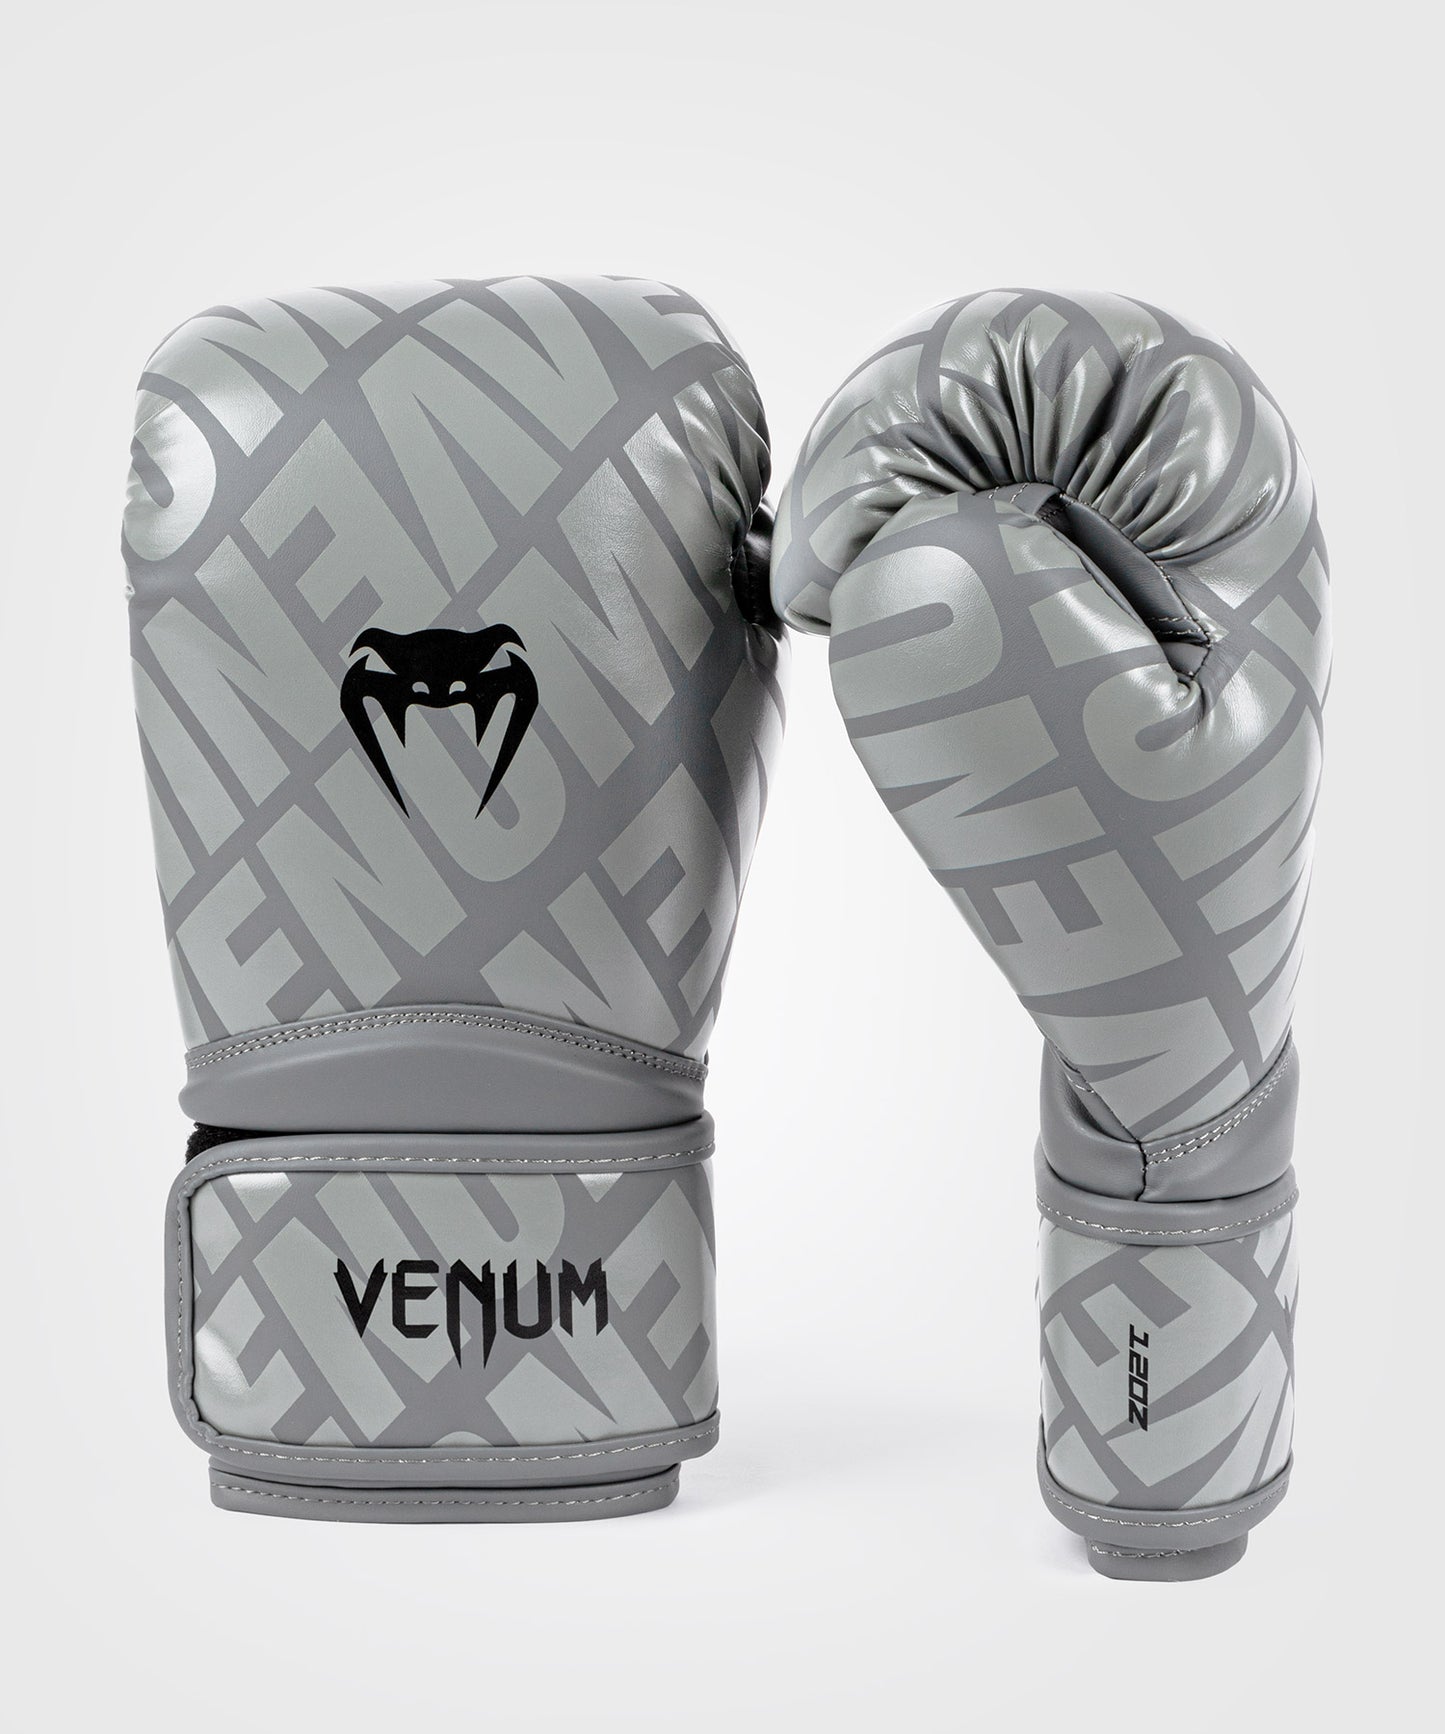 Venum Contender 1.5 XT Guantes de Boxeo - Gris/Negro